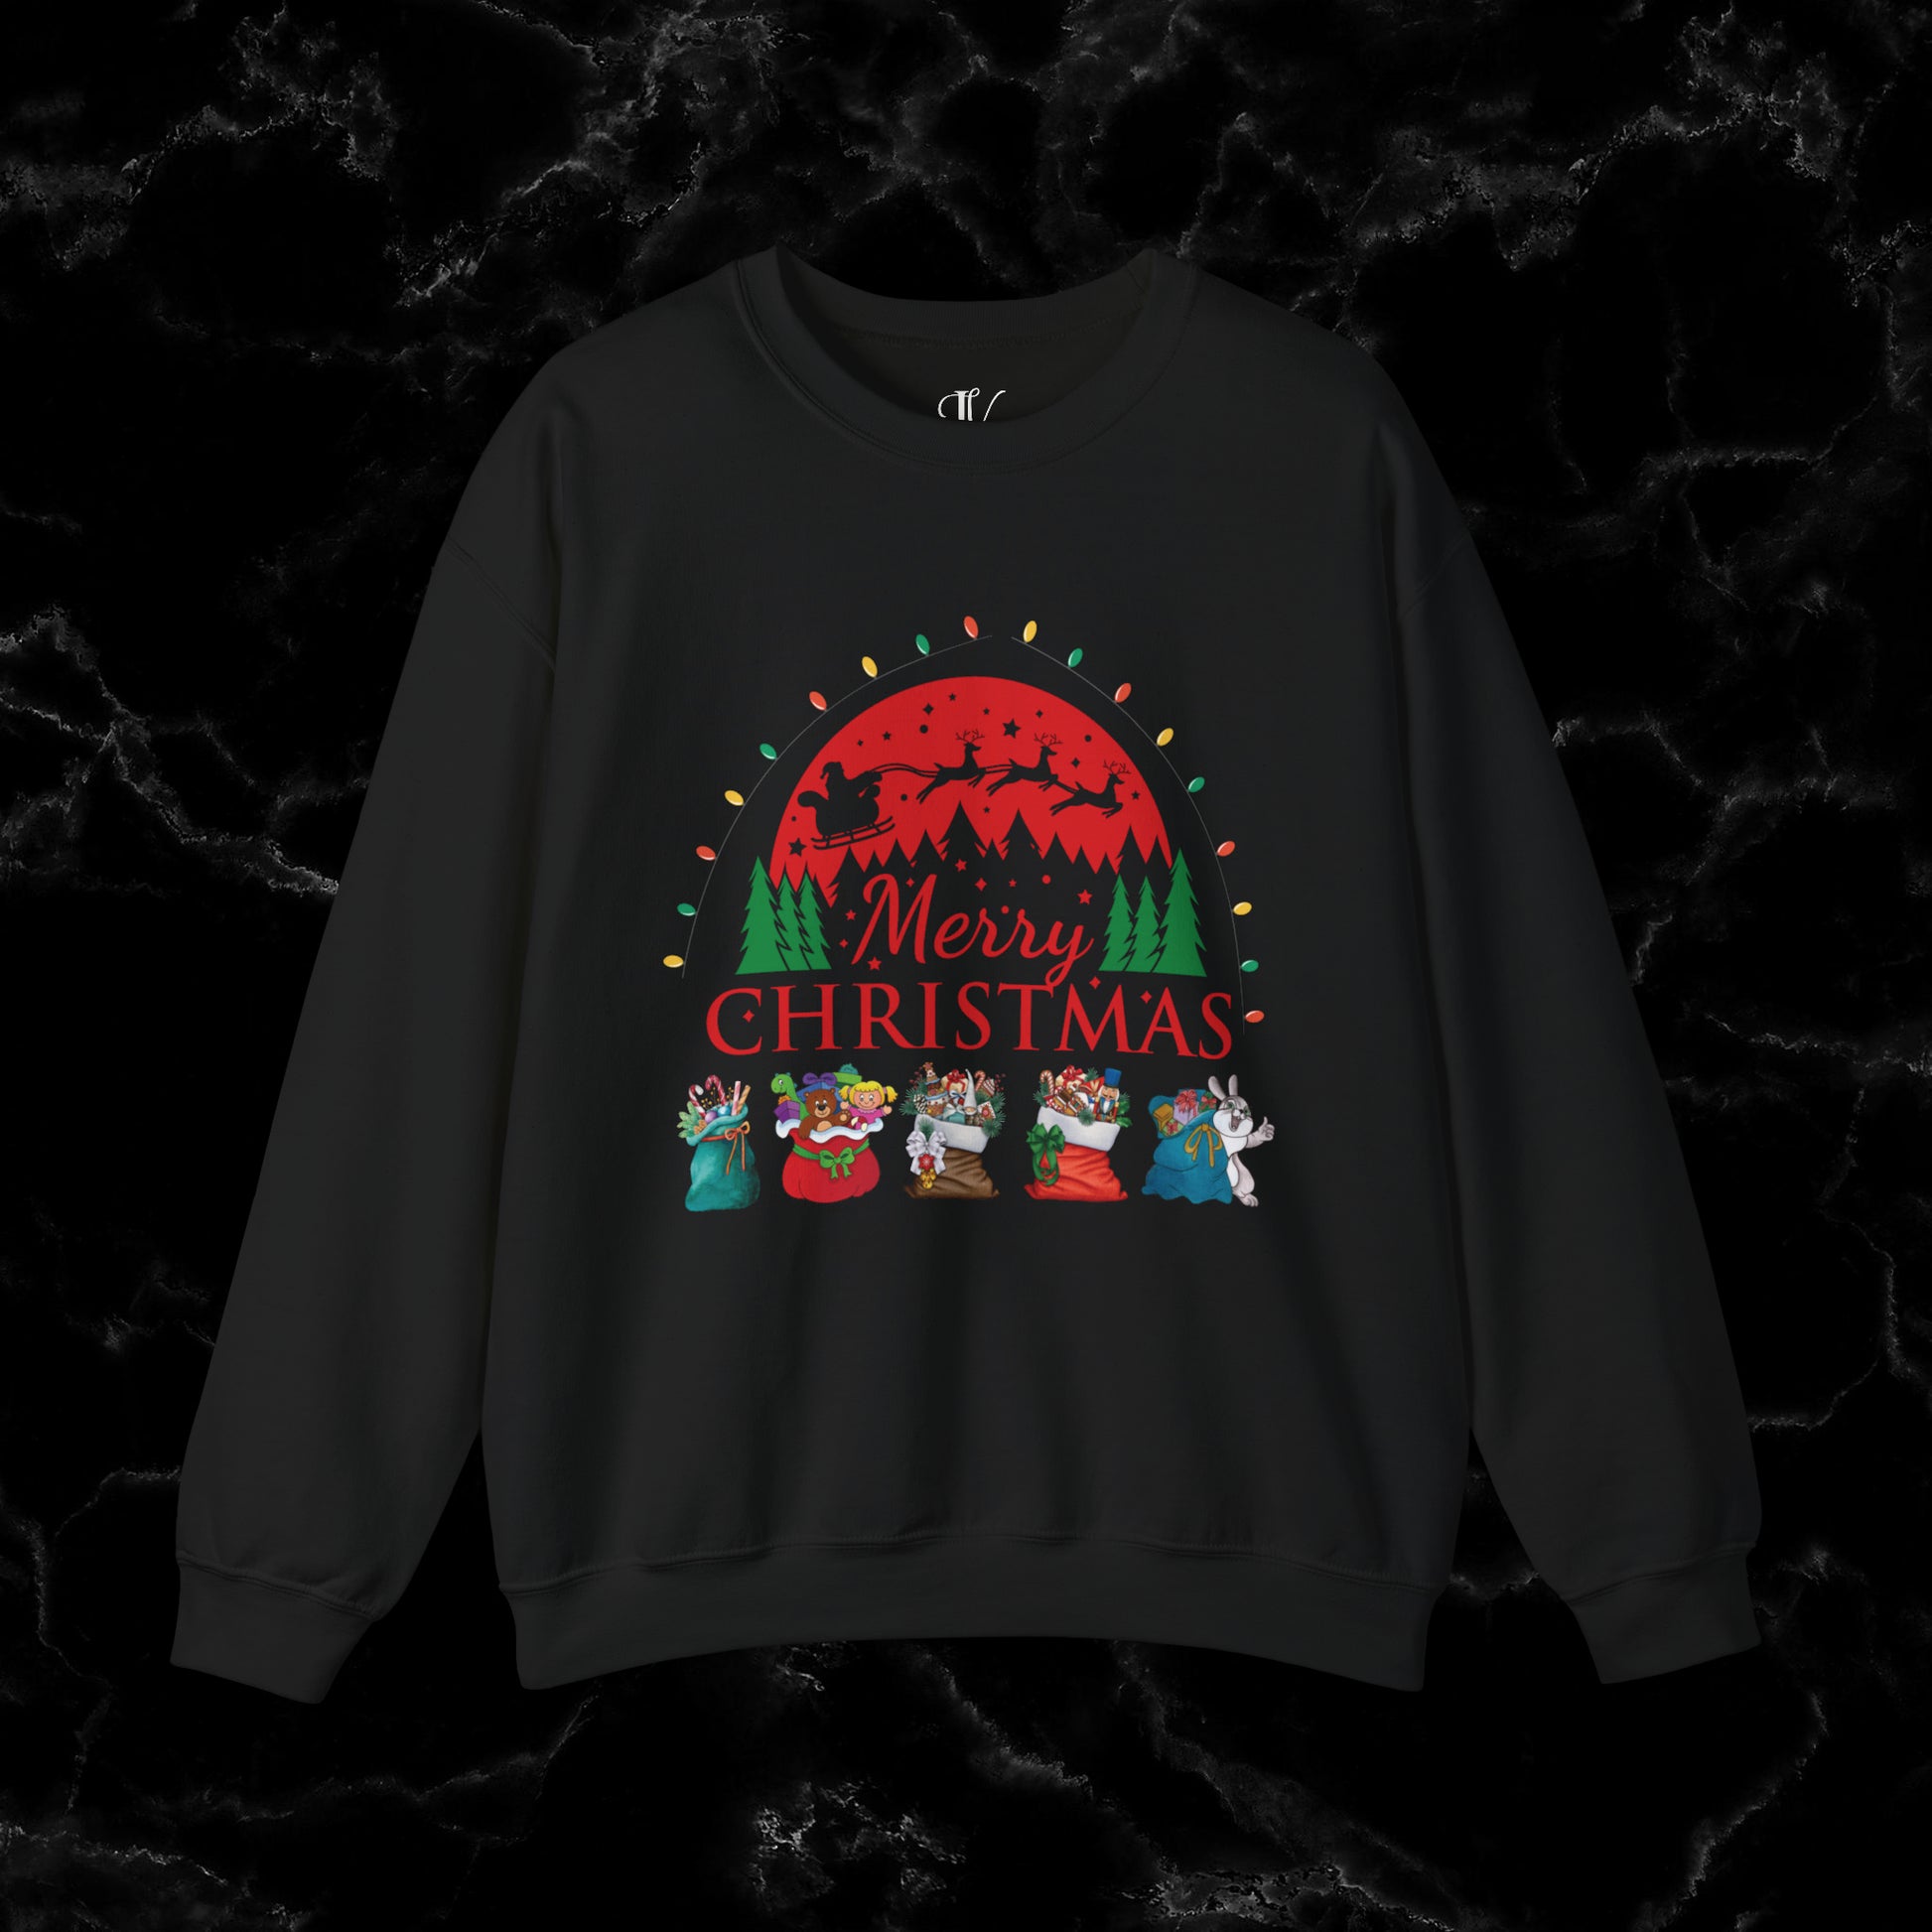 Merry Christmas Sweatshirt - Christmas Shirt with Santa and Festive Theme Sweatshirt S Black 